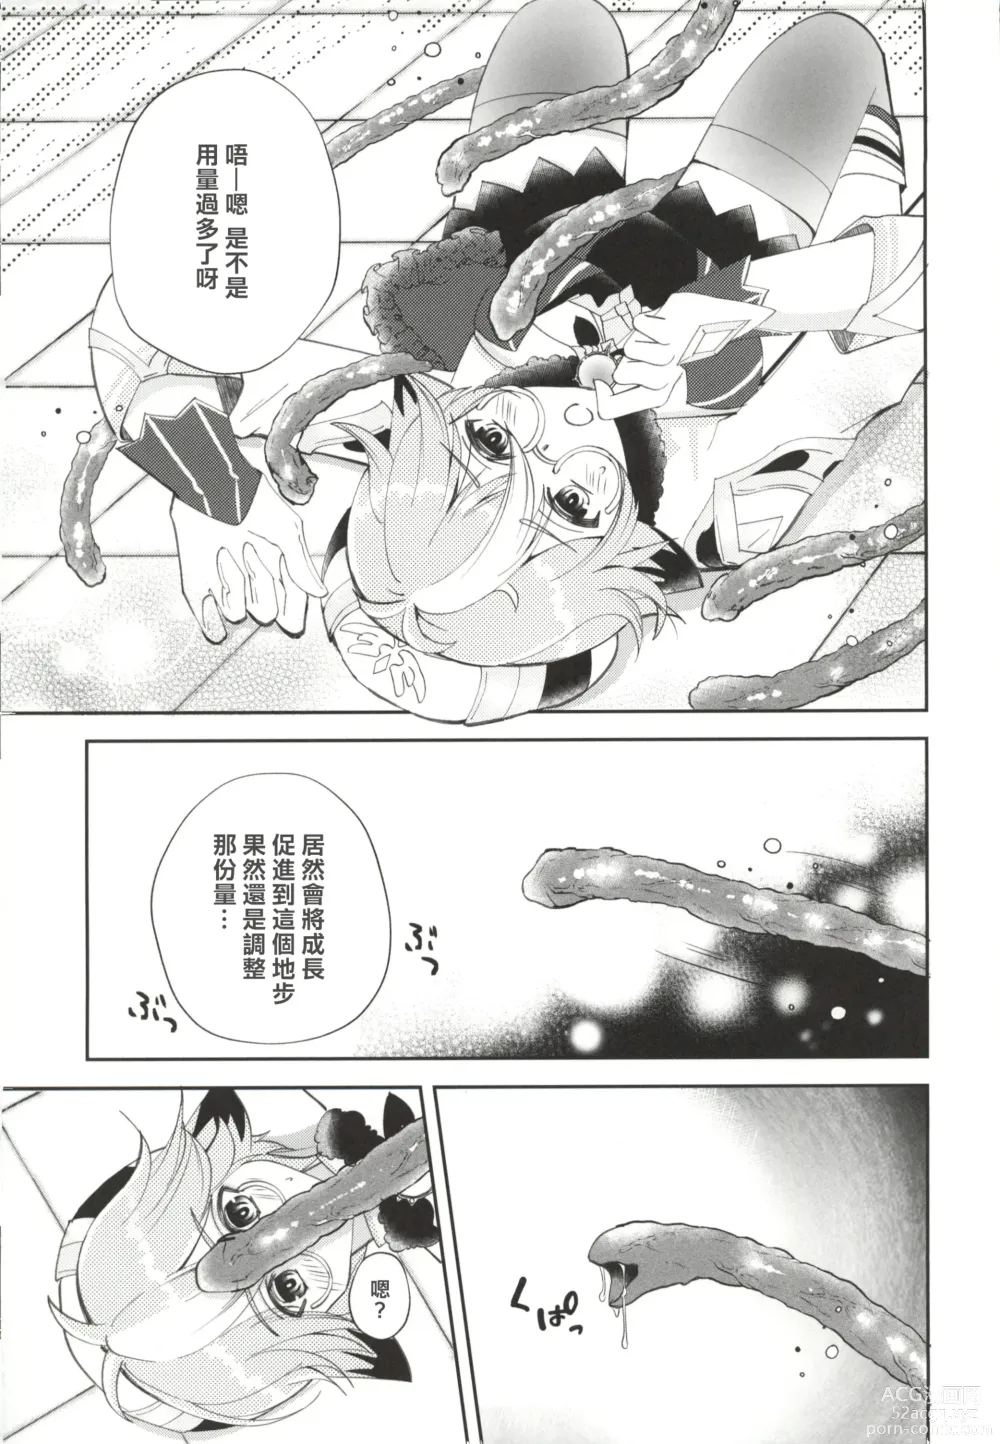 Page 5 of doujinshi Jouai Renseijutsu